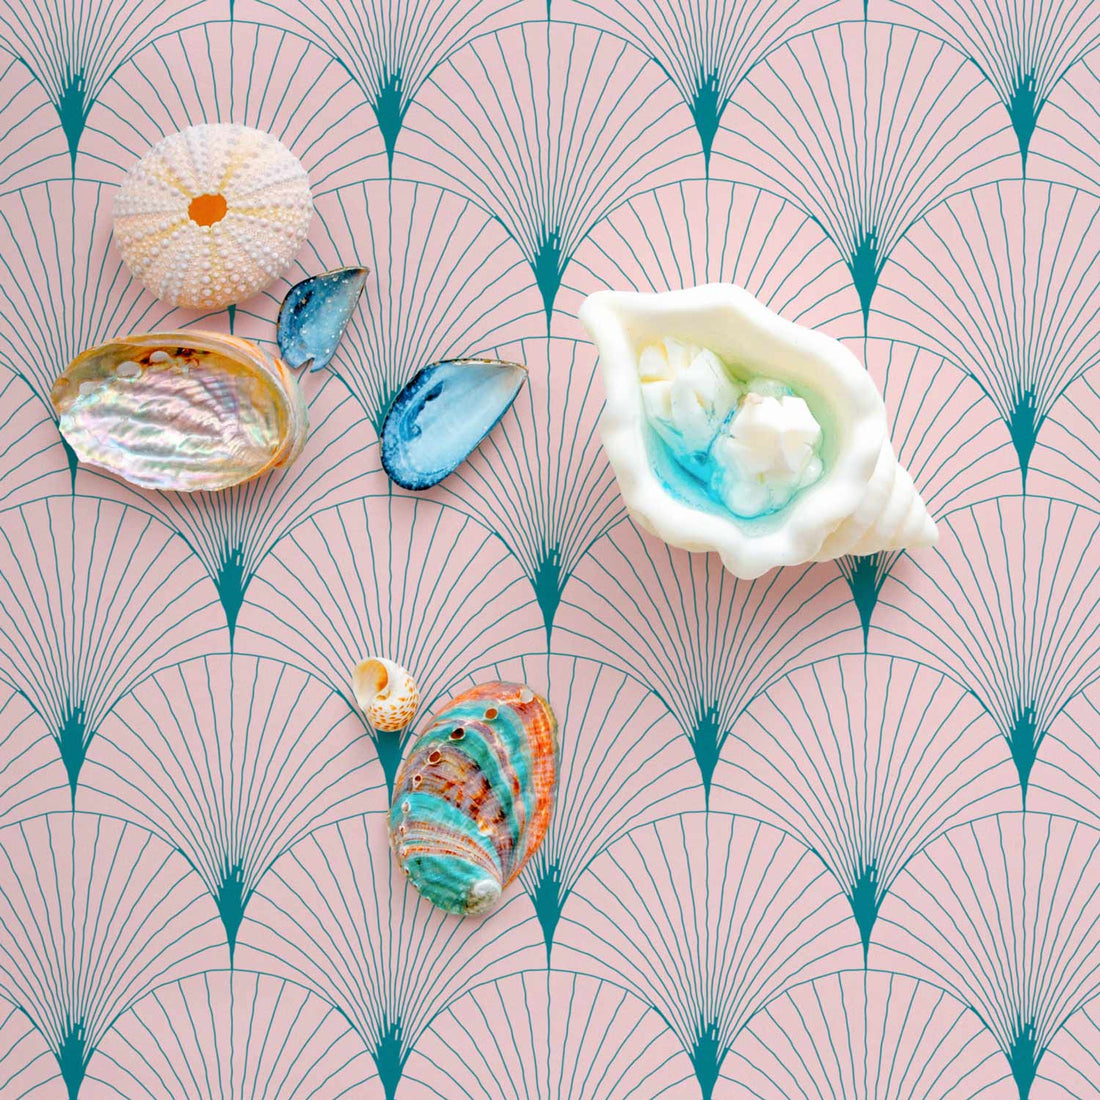 pastel color ocean inspired wallpaper design with seashells